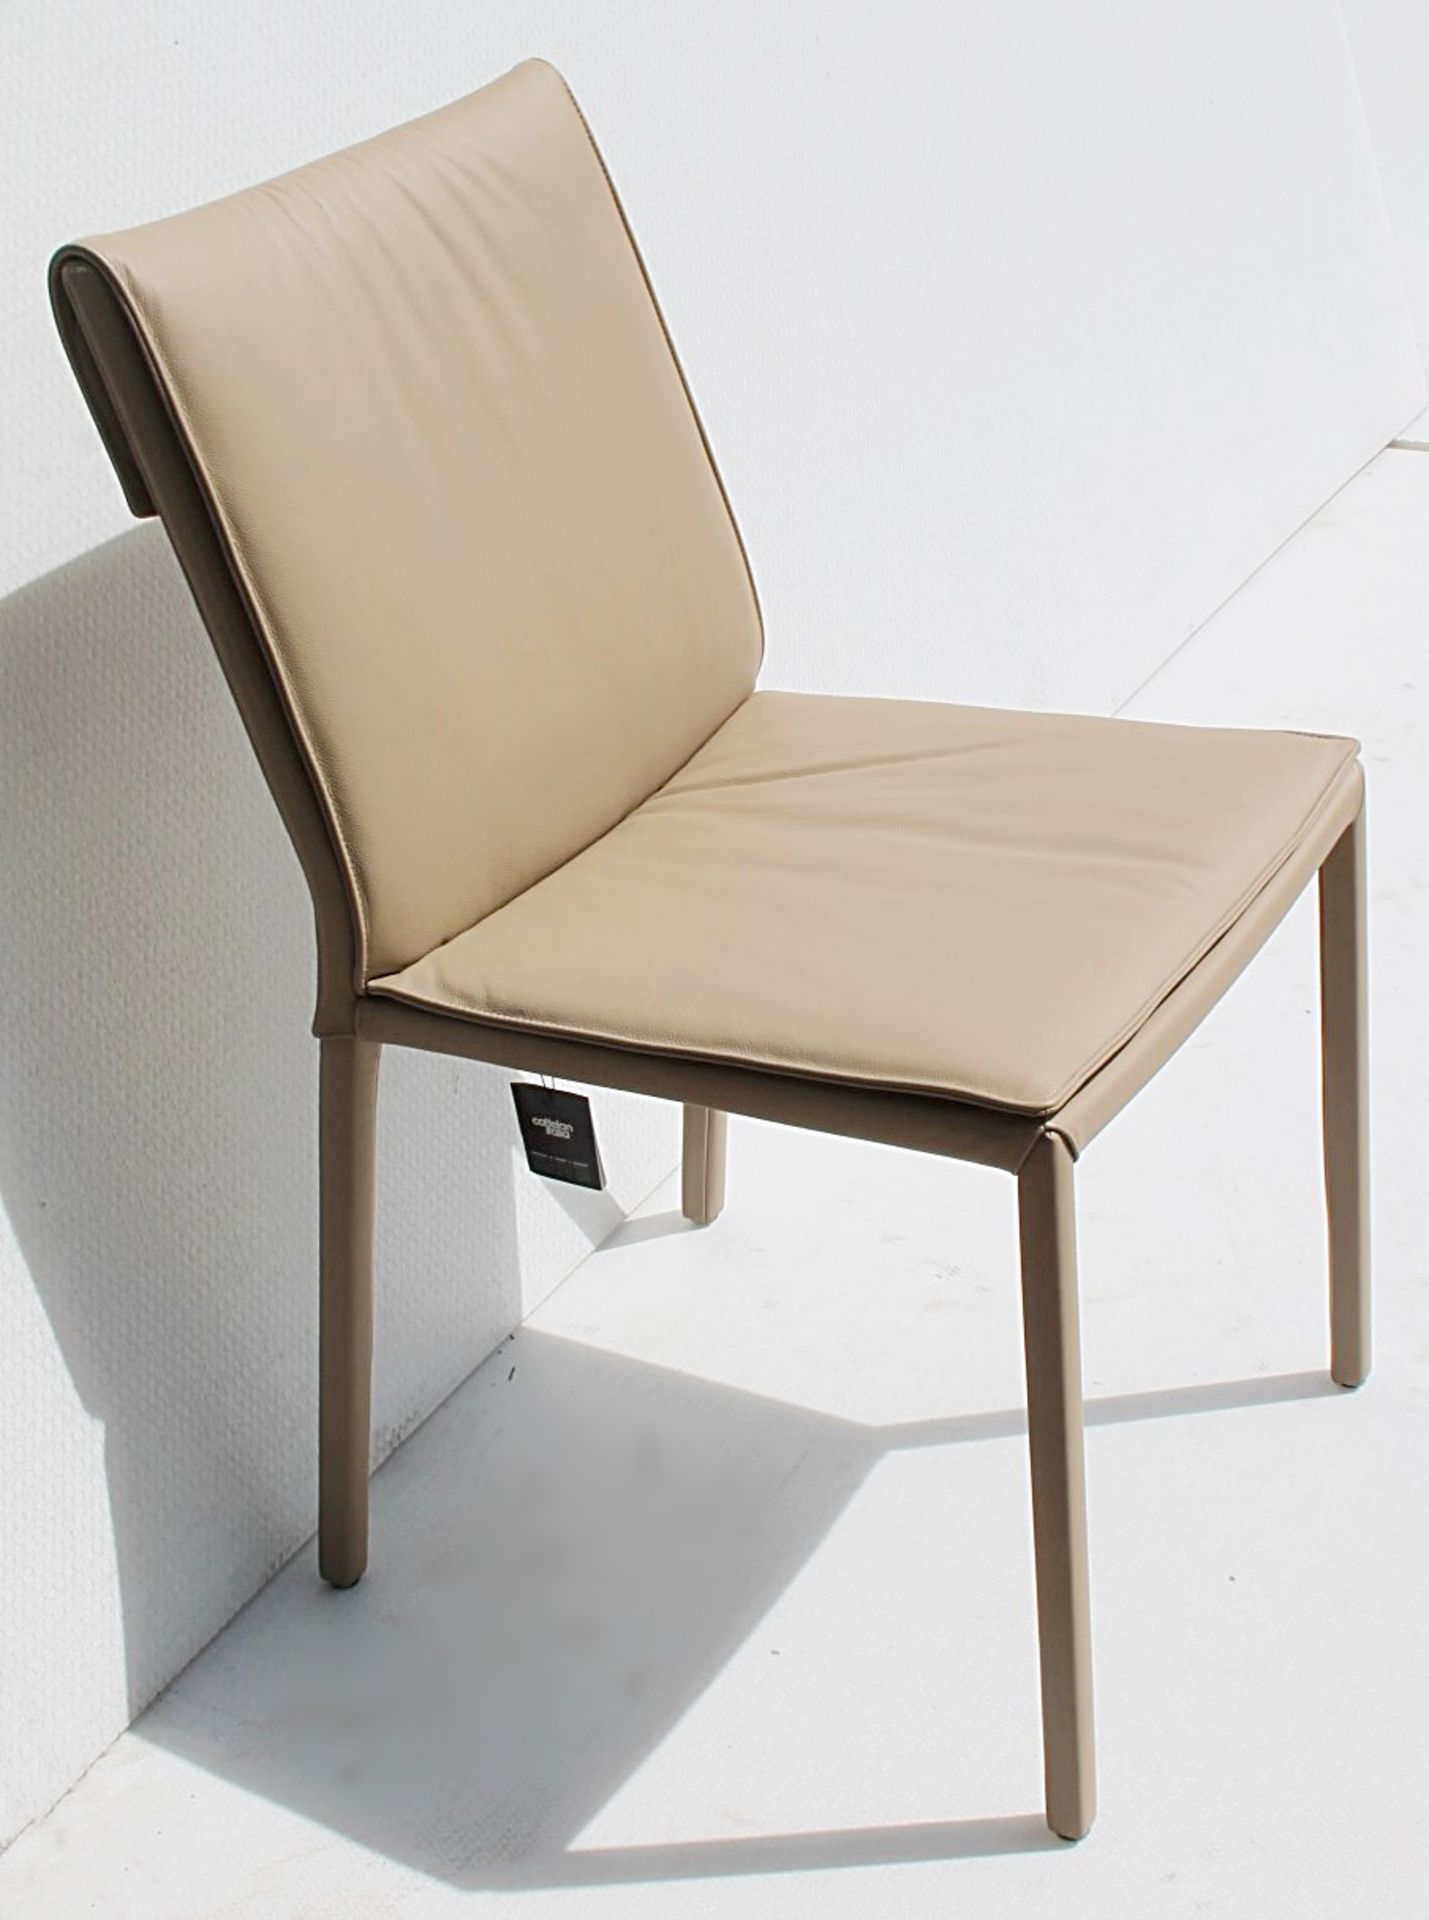 6 x CATTELAN 'Isabel' Italian Designer Leather Upholstered Dining Chairs - Original Price £3,864 - Image 4 of 9